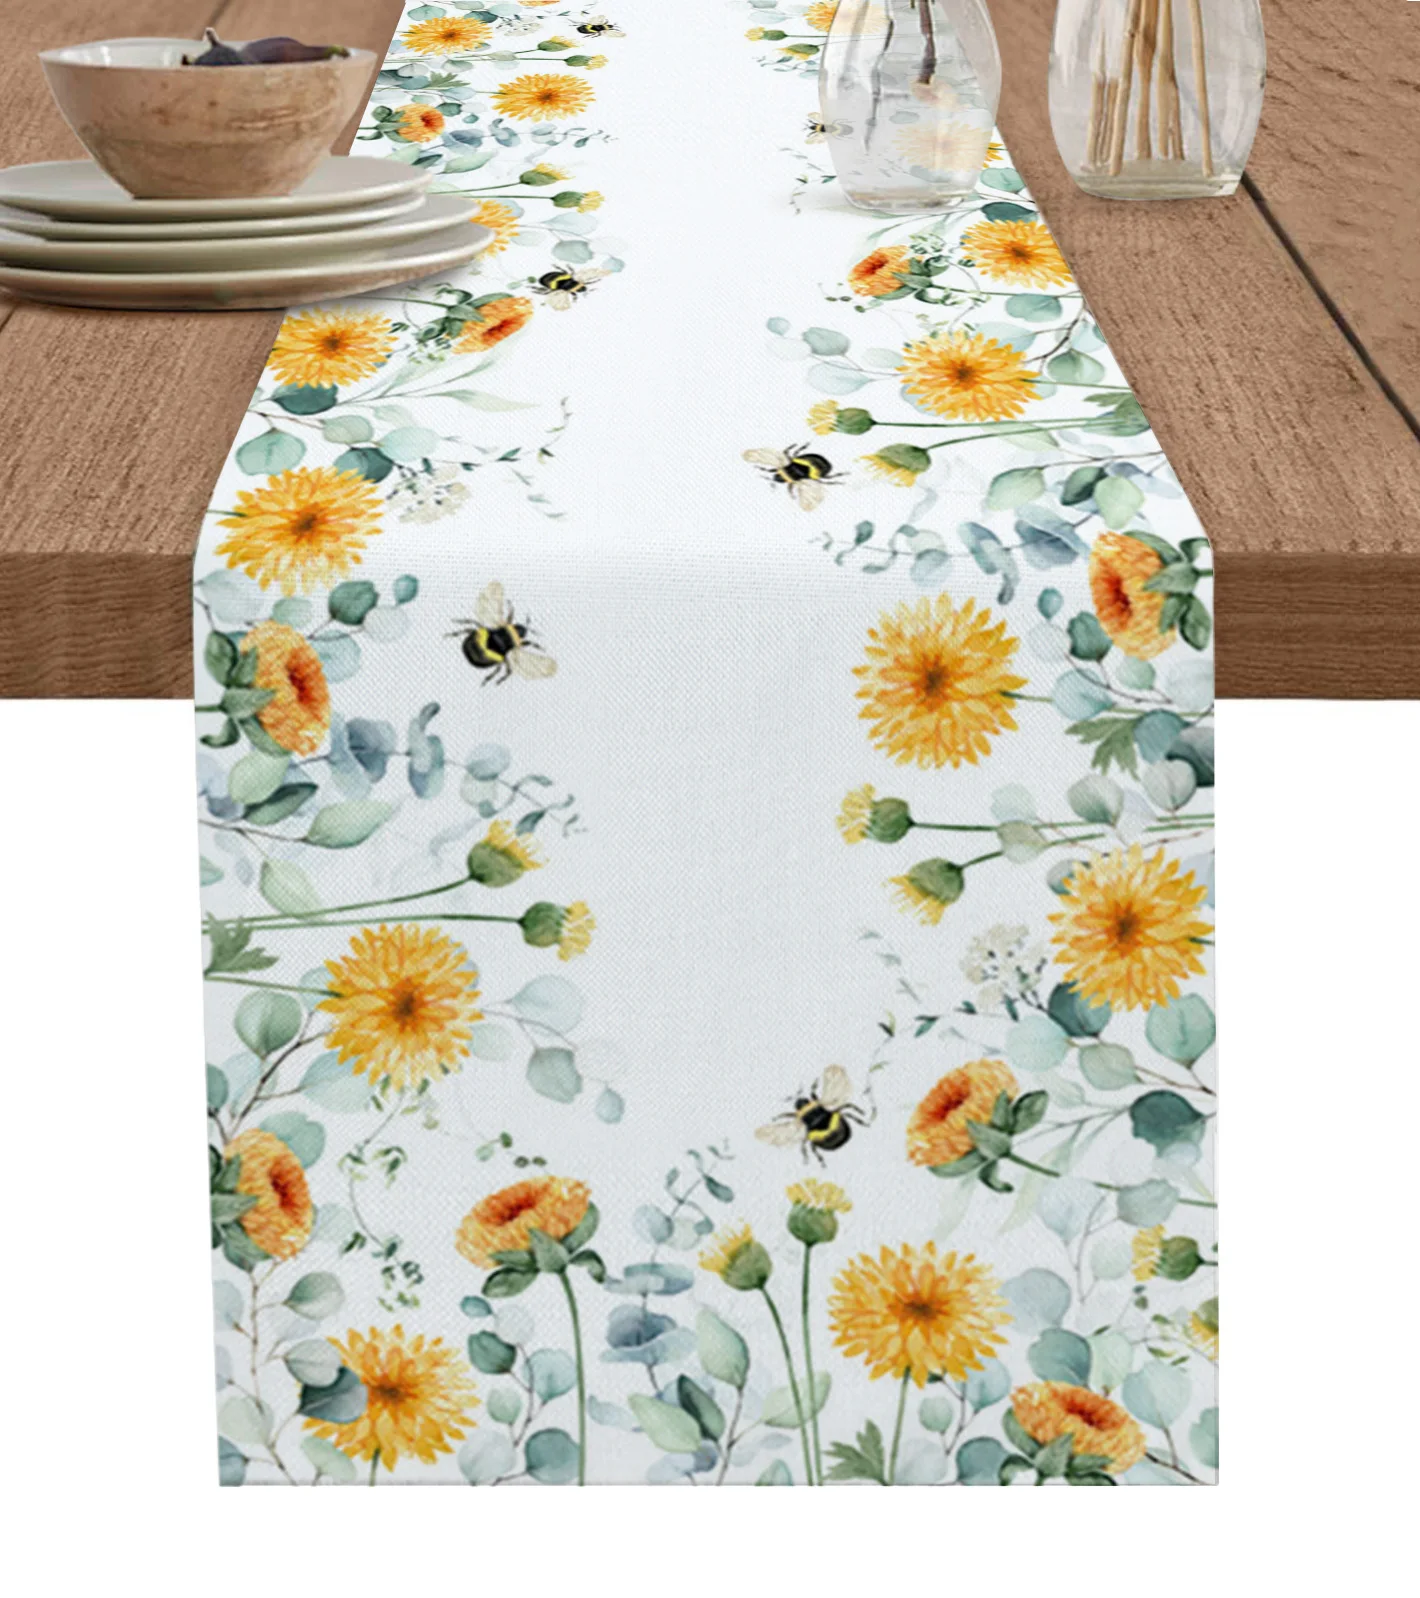 

Idyllic Eucalyptus Yellow Dandelion Table Runner Luxury Kitchen Dining Table Cover Wedding Party Decor Cotton Linen Tablecloth